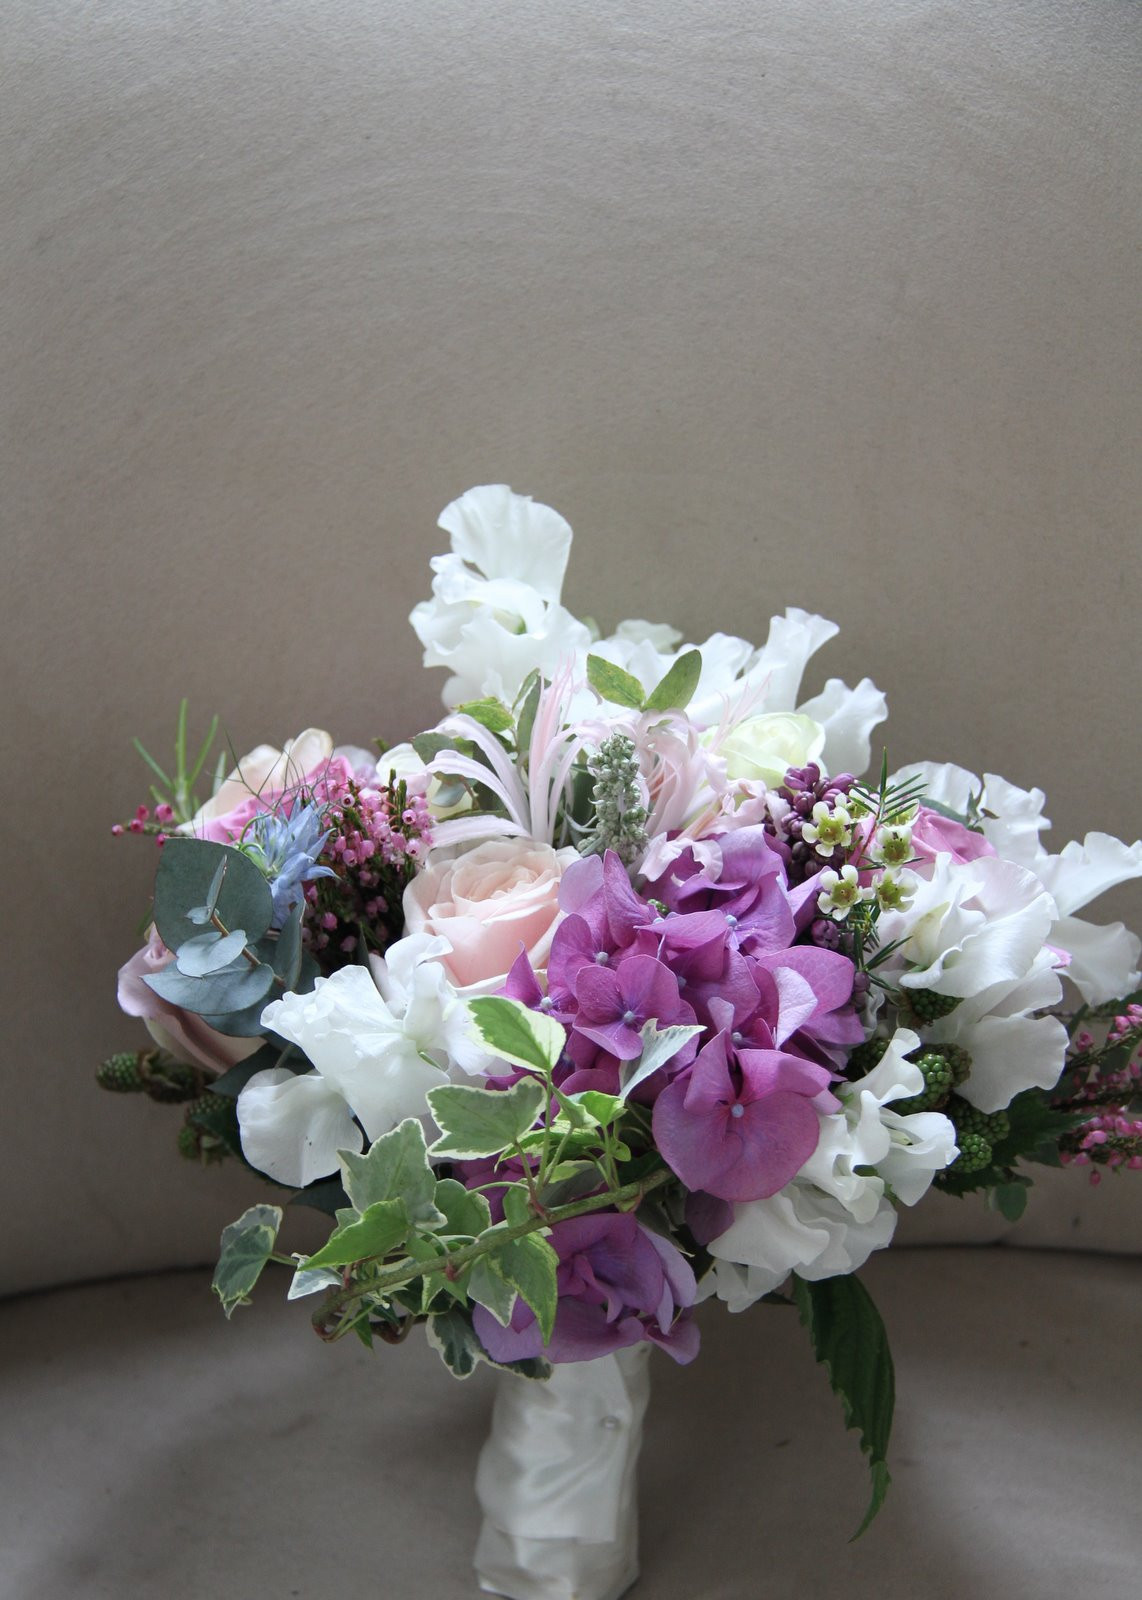 Lilac Wedding Flowers
 The Flower Magician Victorian Lilac Wedding Bouquet